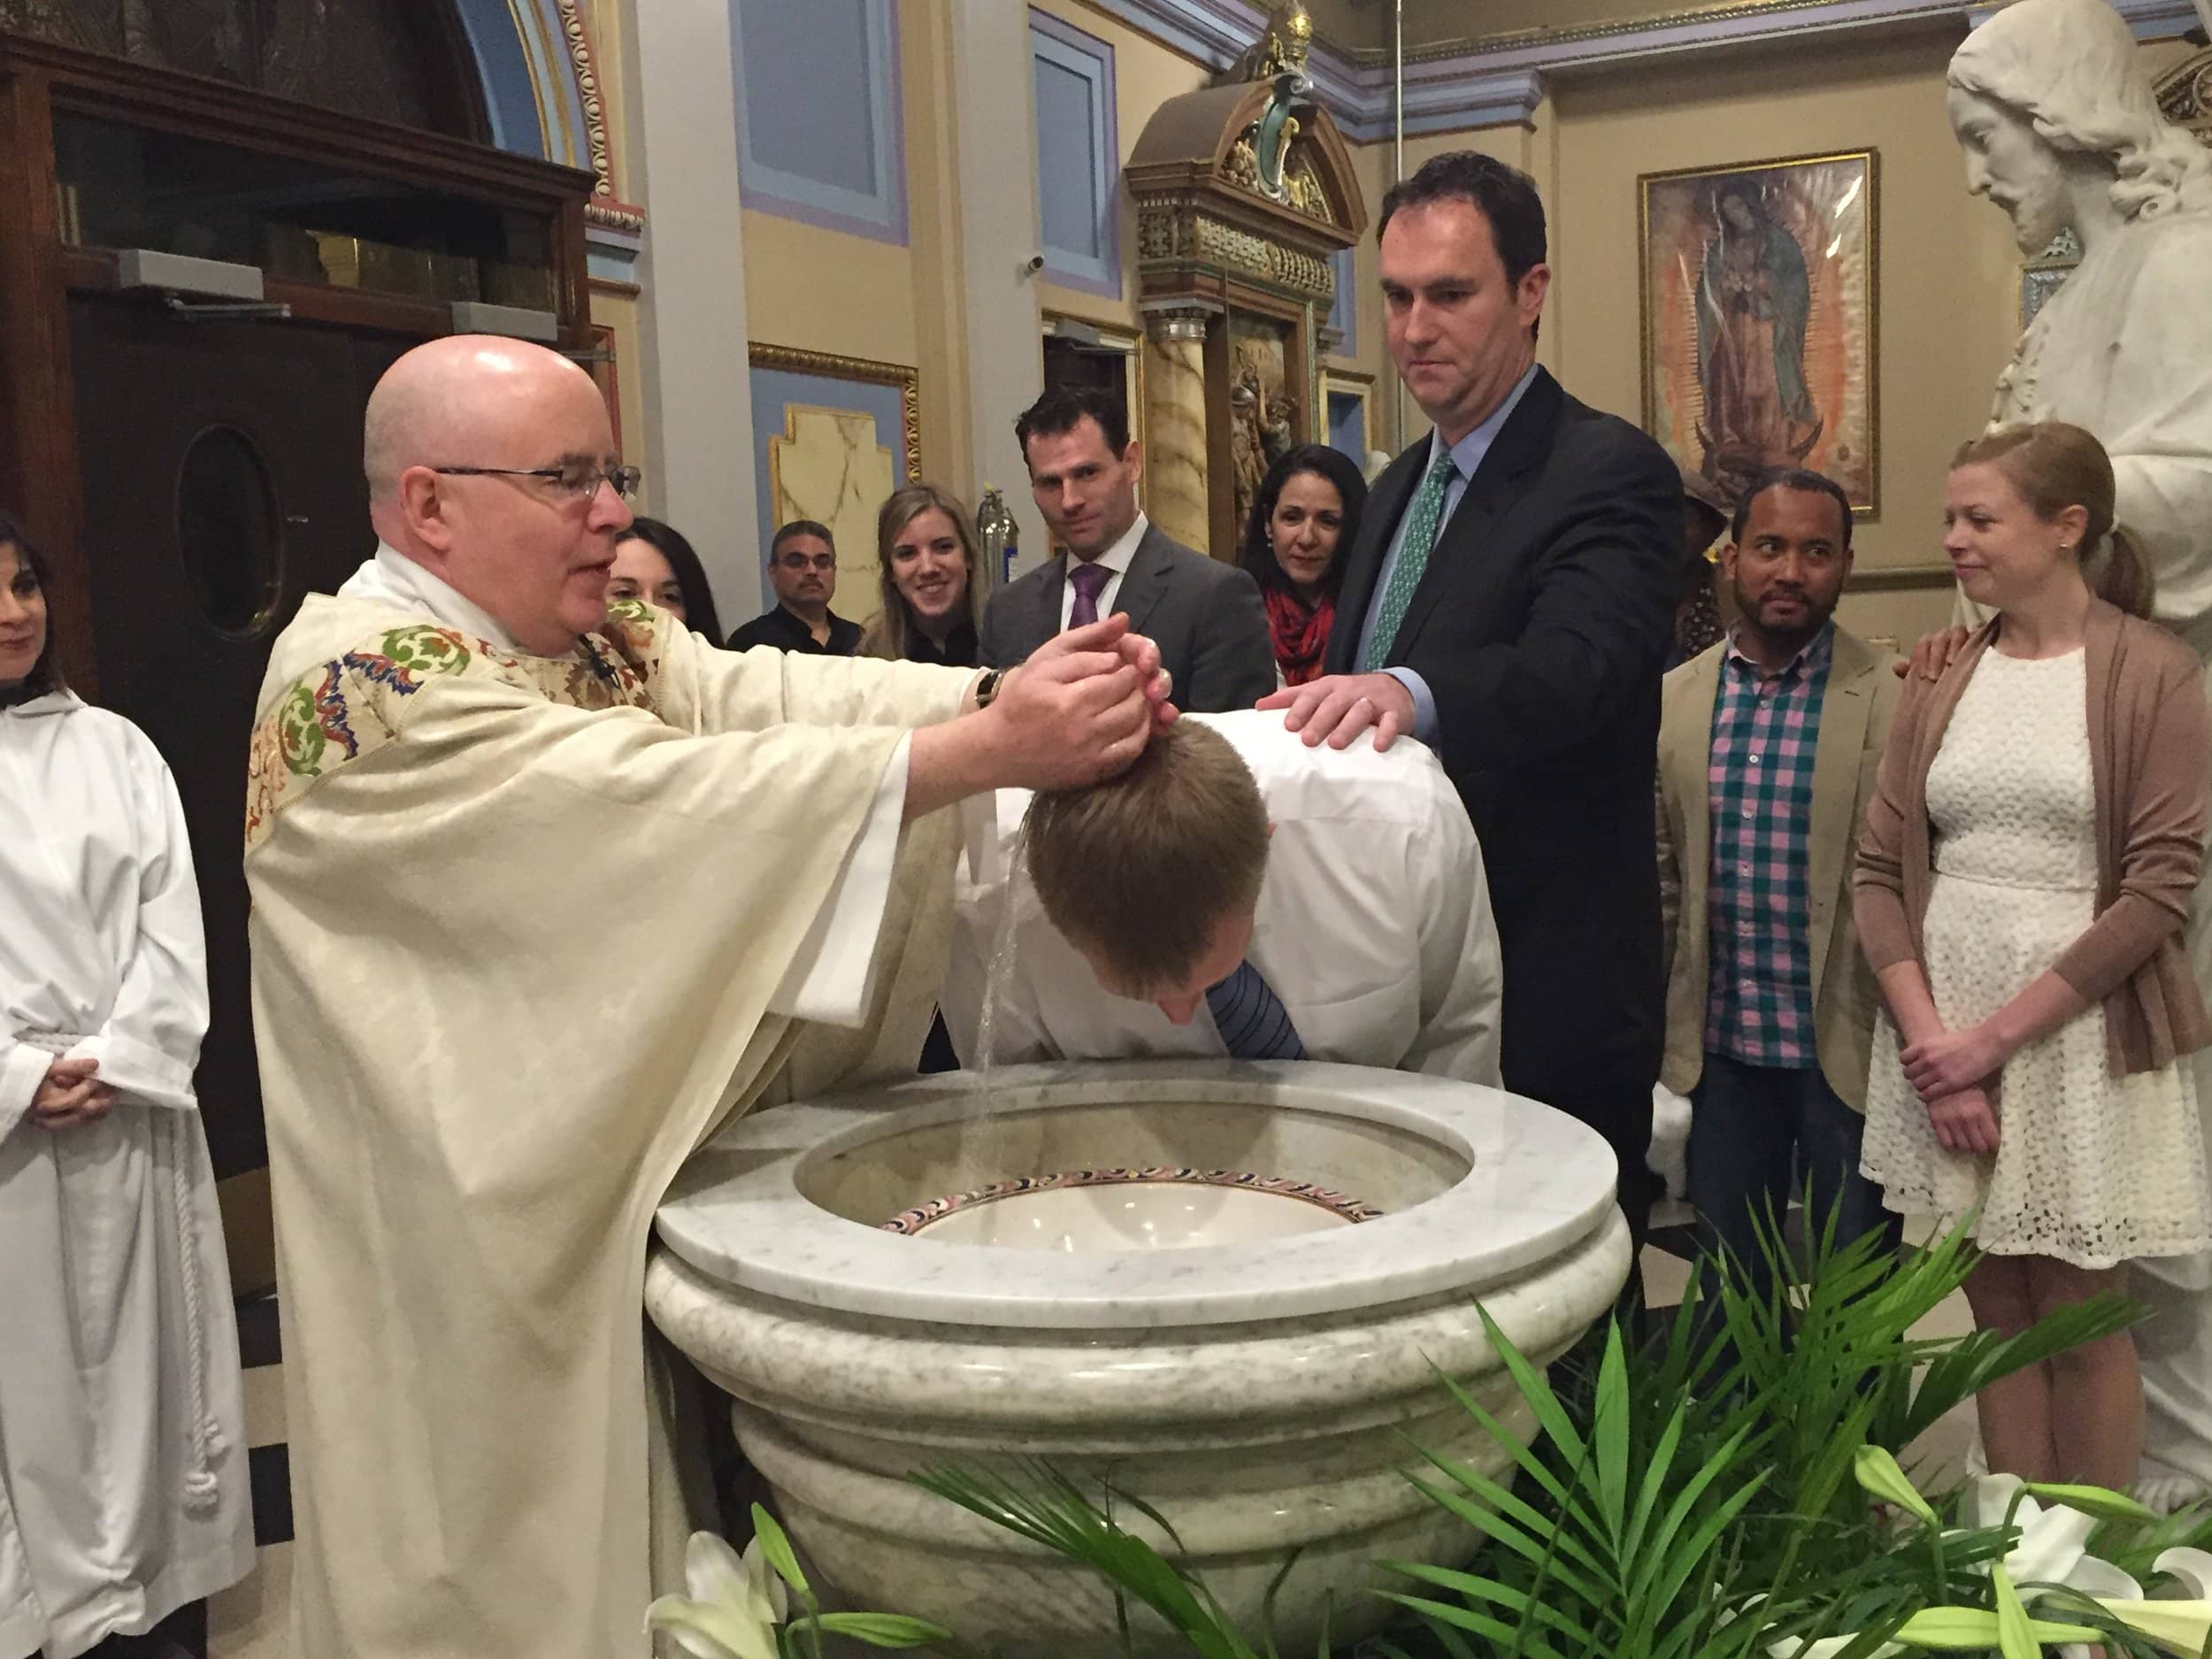 baptism_sacrament-first-st-francis-de-sales-church-new-york-city.jpg